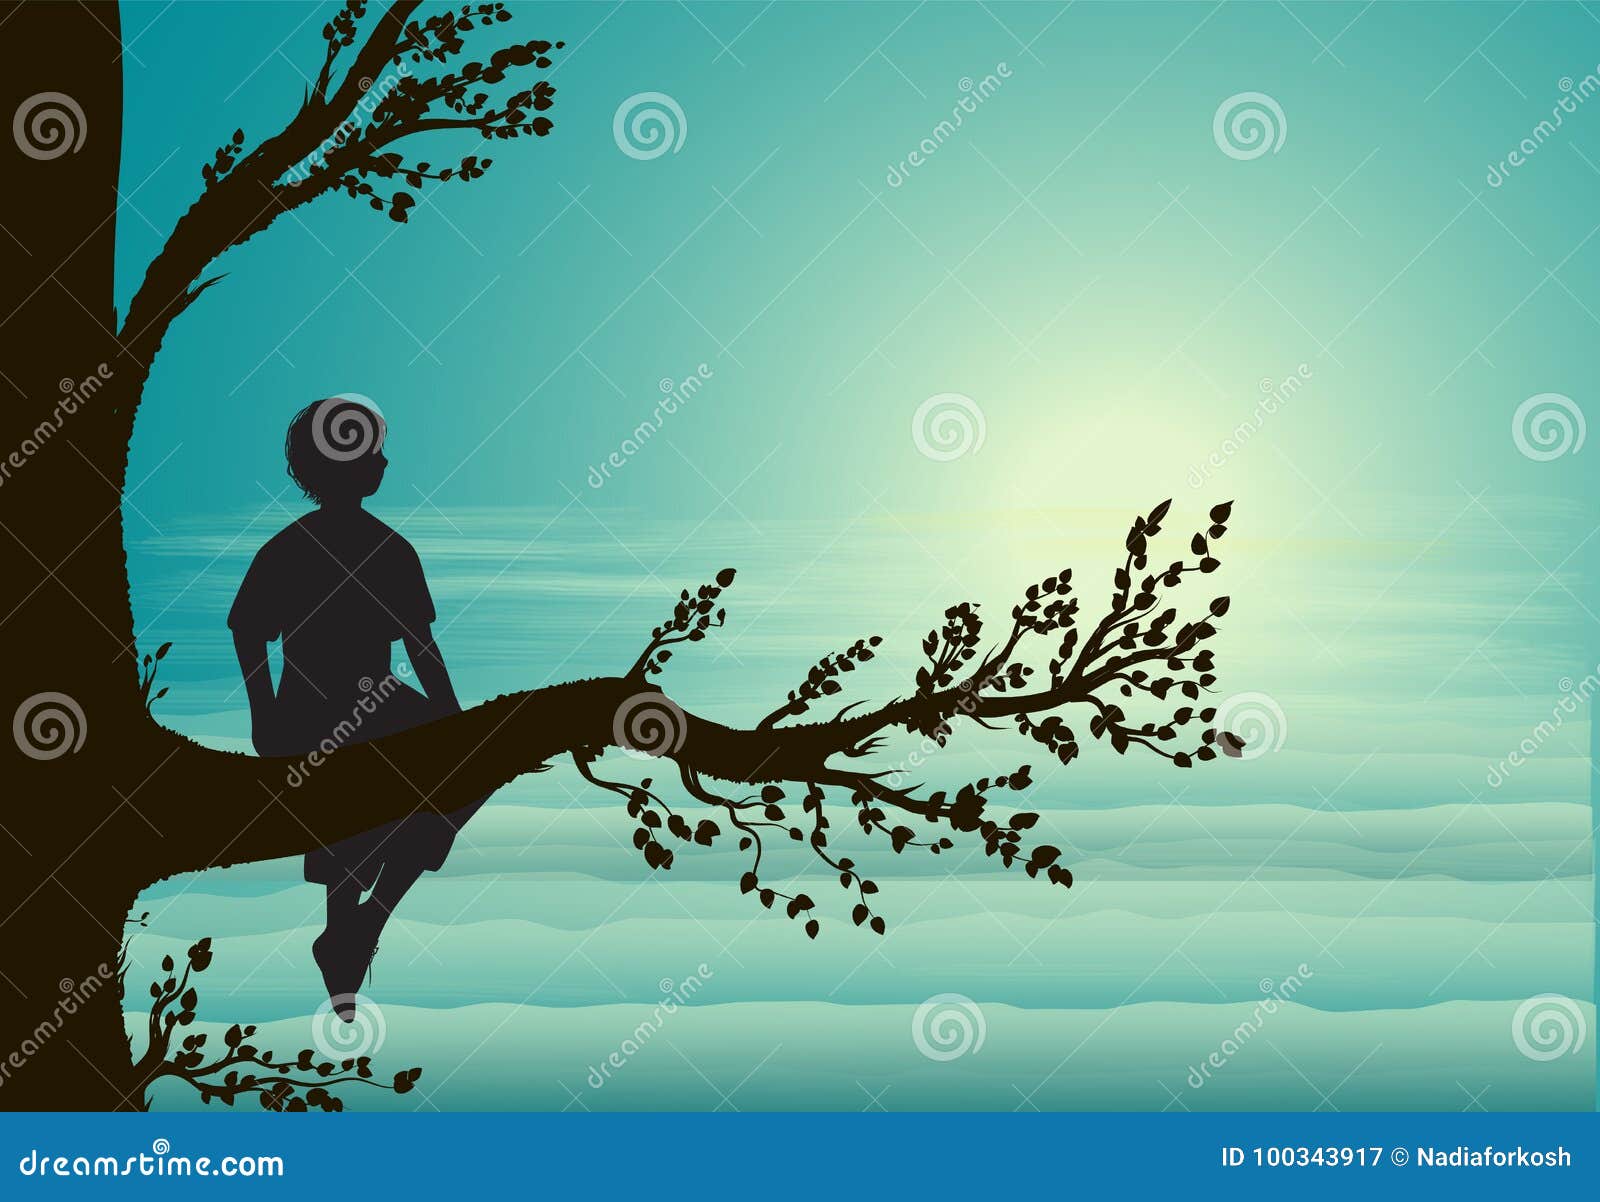 boy sitting on big tree branch, silhouette, secret place, childhood memory, dream,